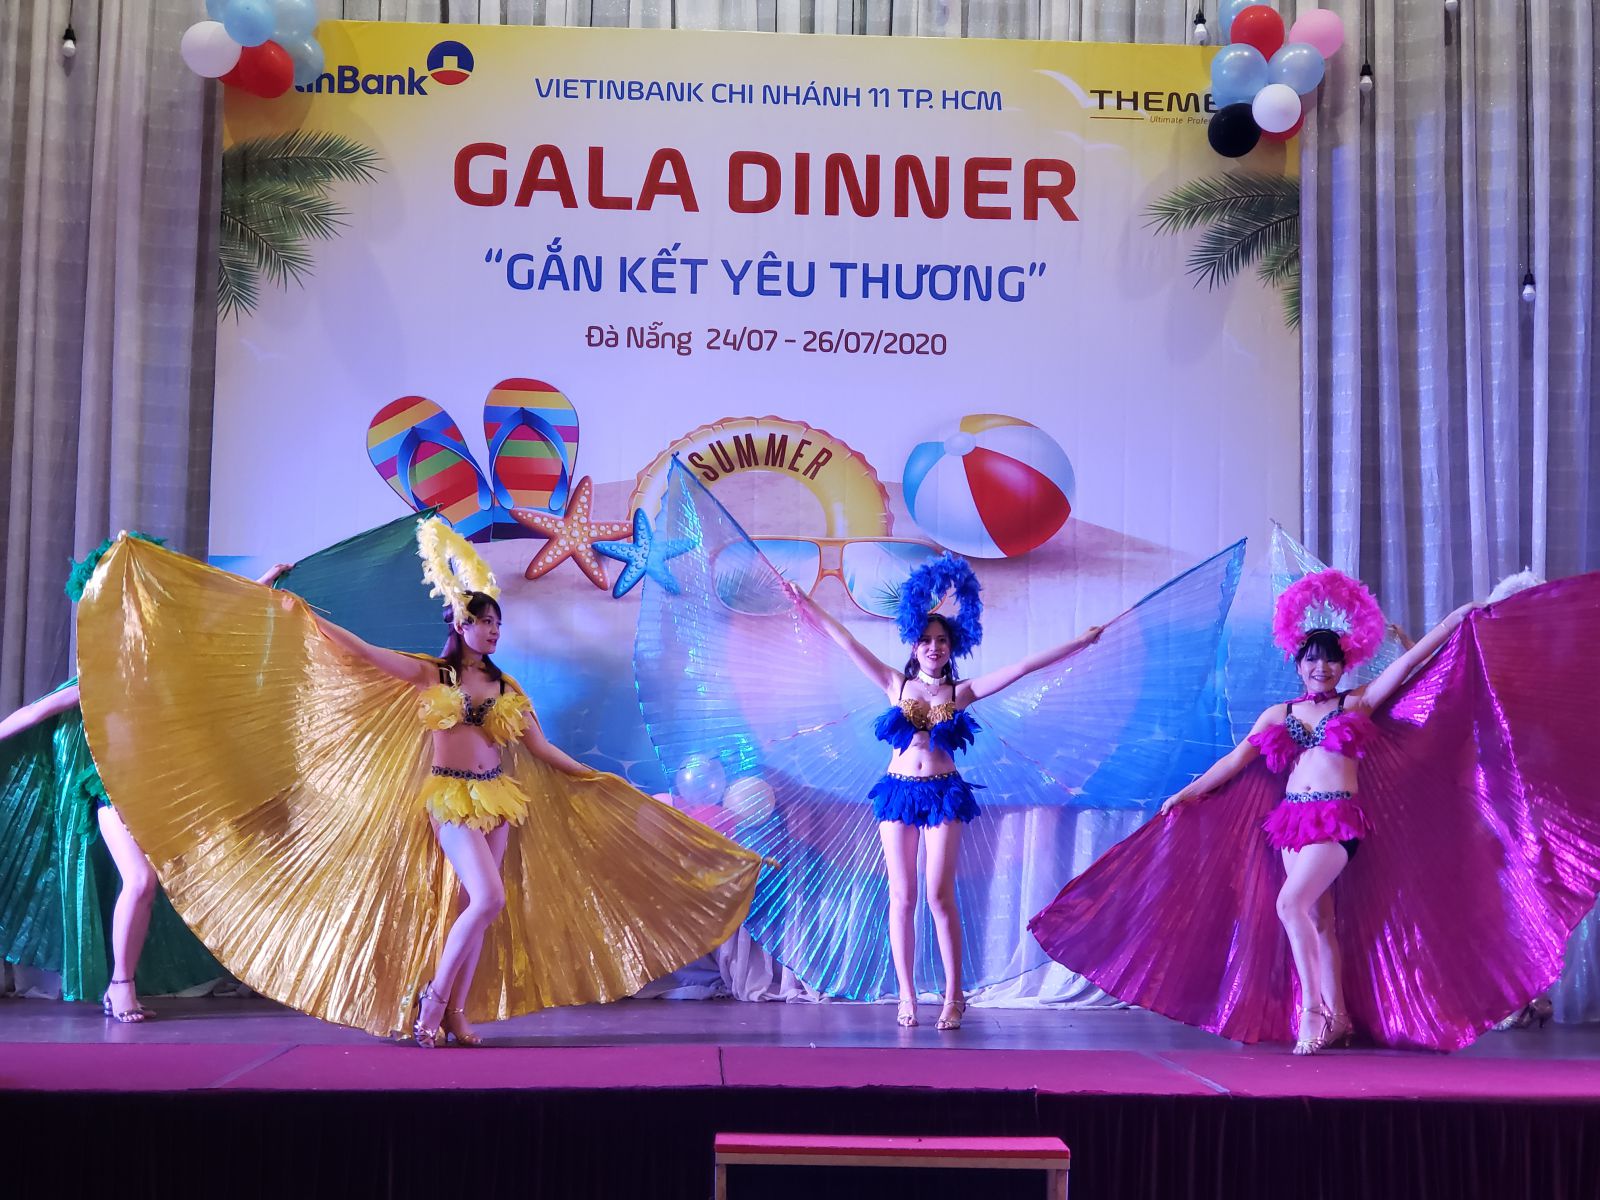 gala dinner - Theme Travel